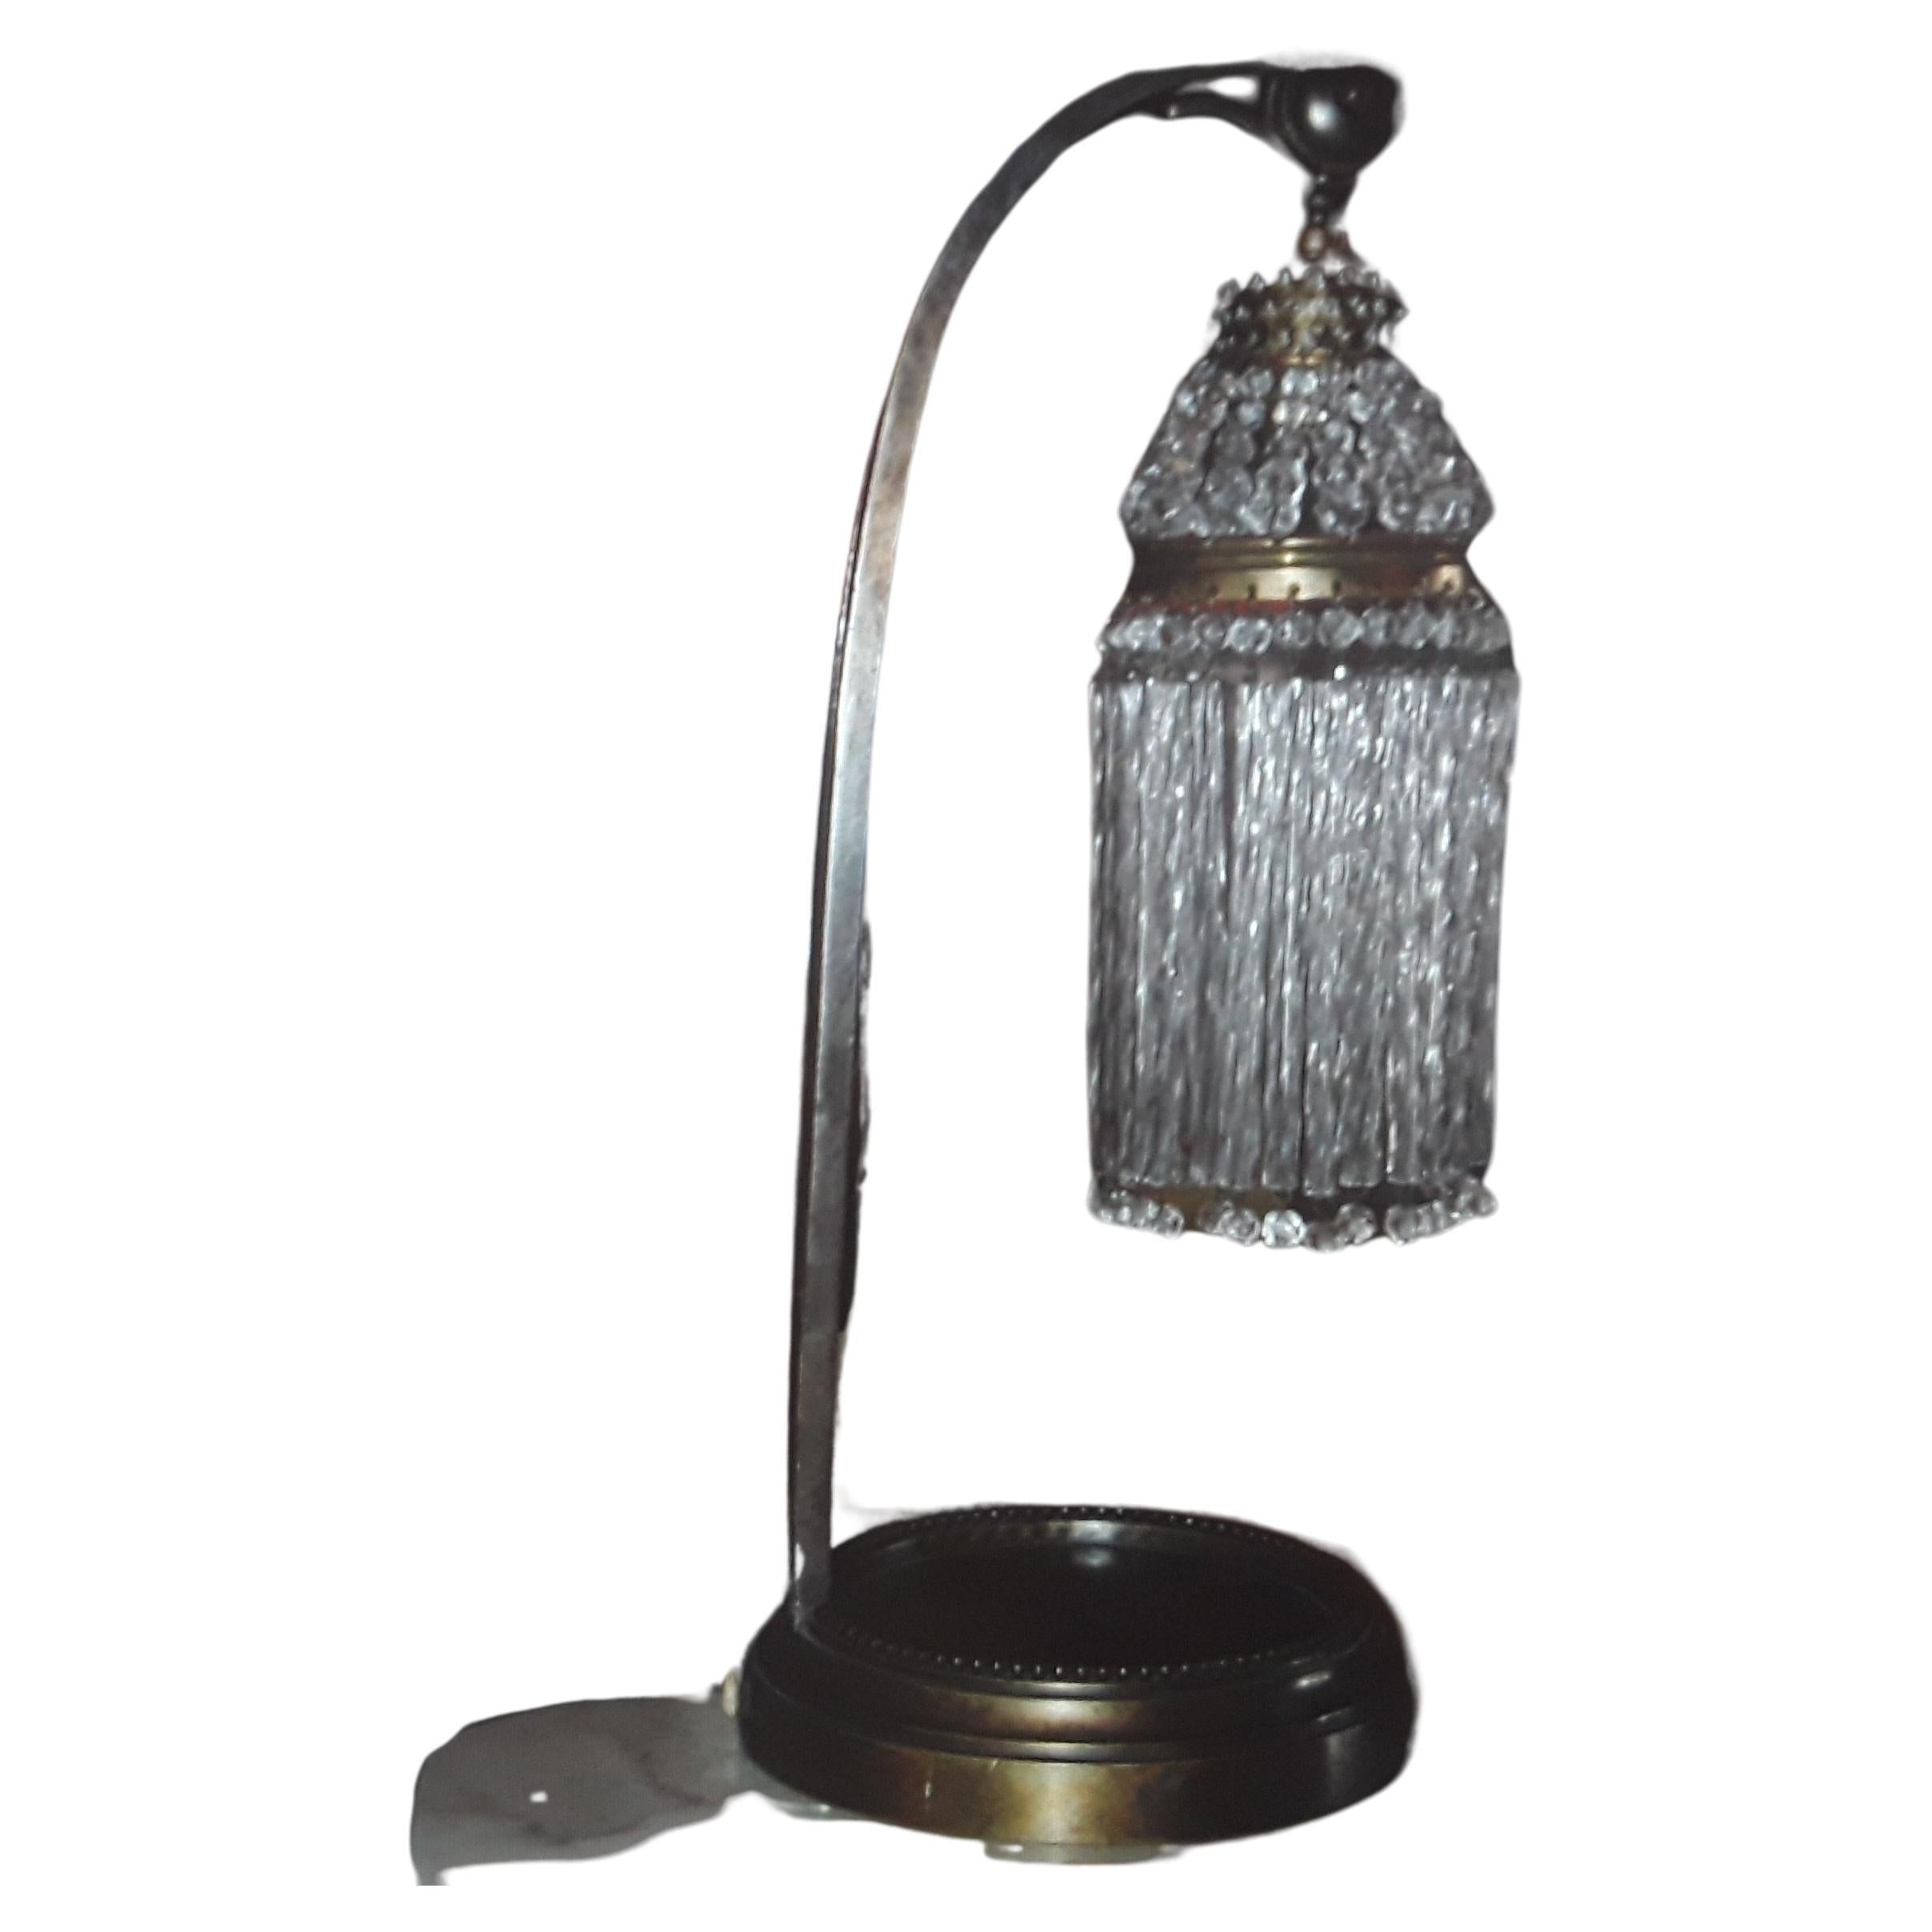 Pr 1920 French Art Deco Bronze Based Desk Lamp w/ Cut Crystal Adjustable Shade. For Sale